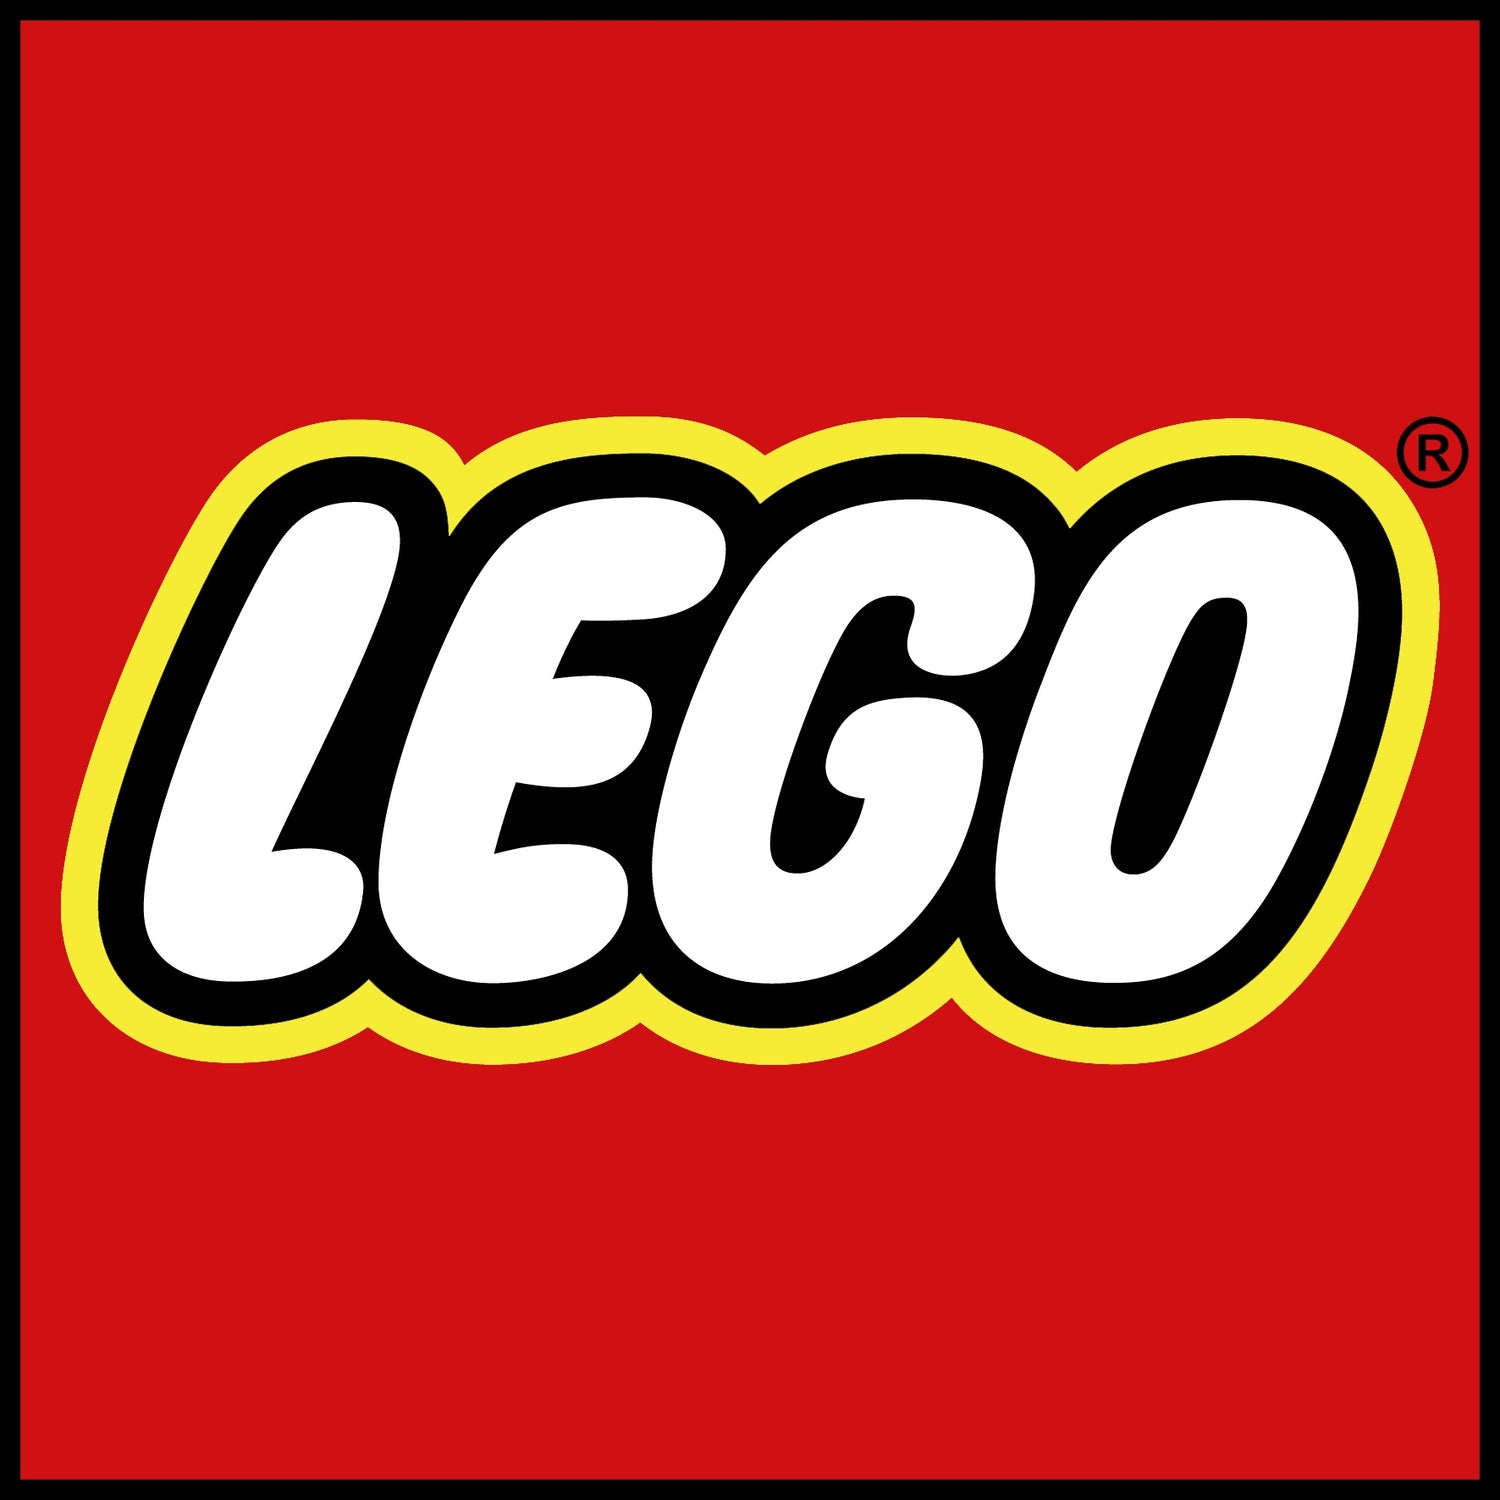 LEGO® 76212 building toy